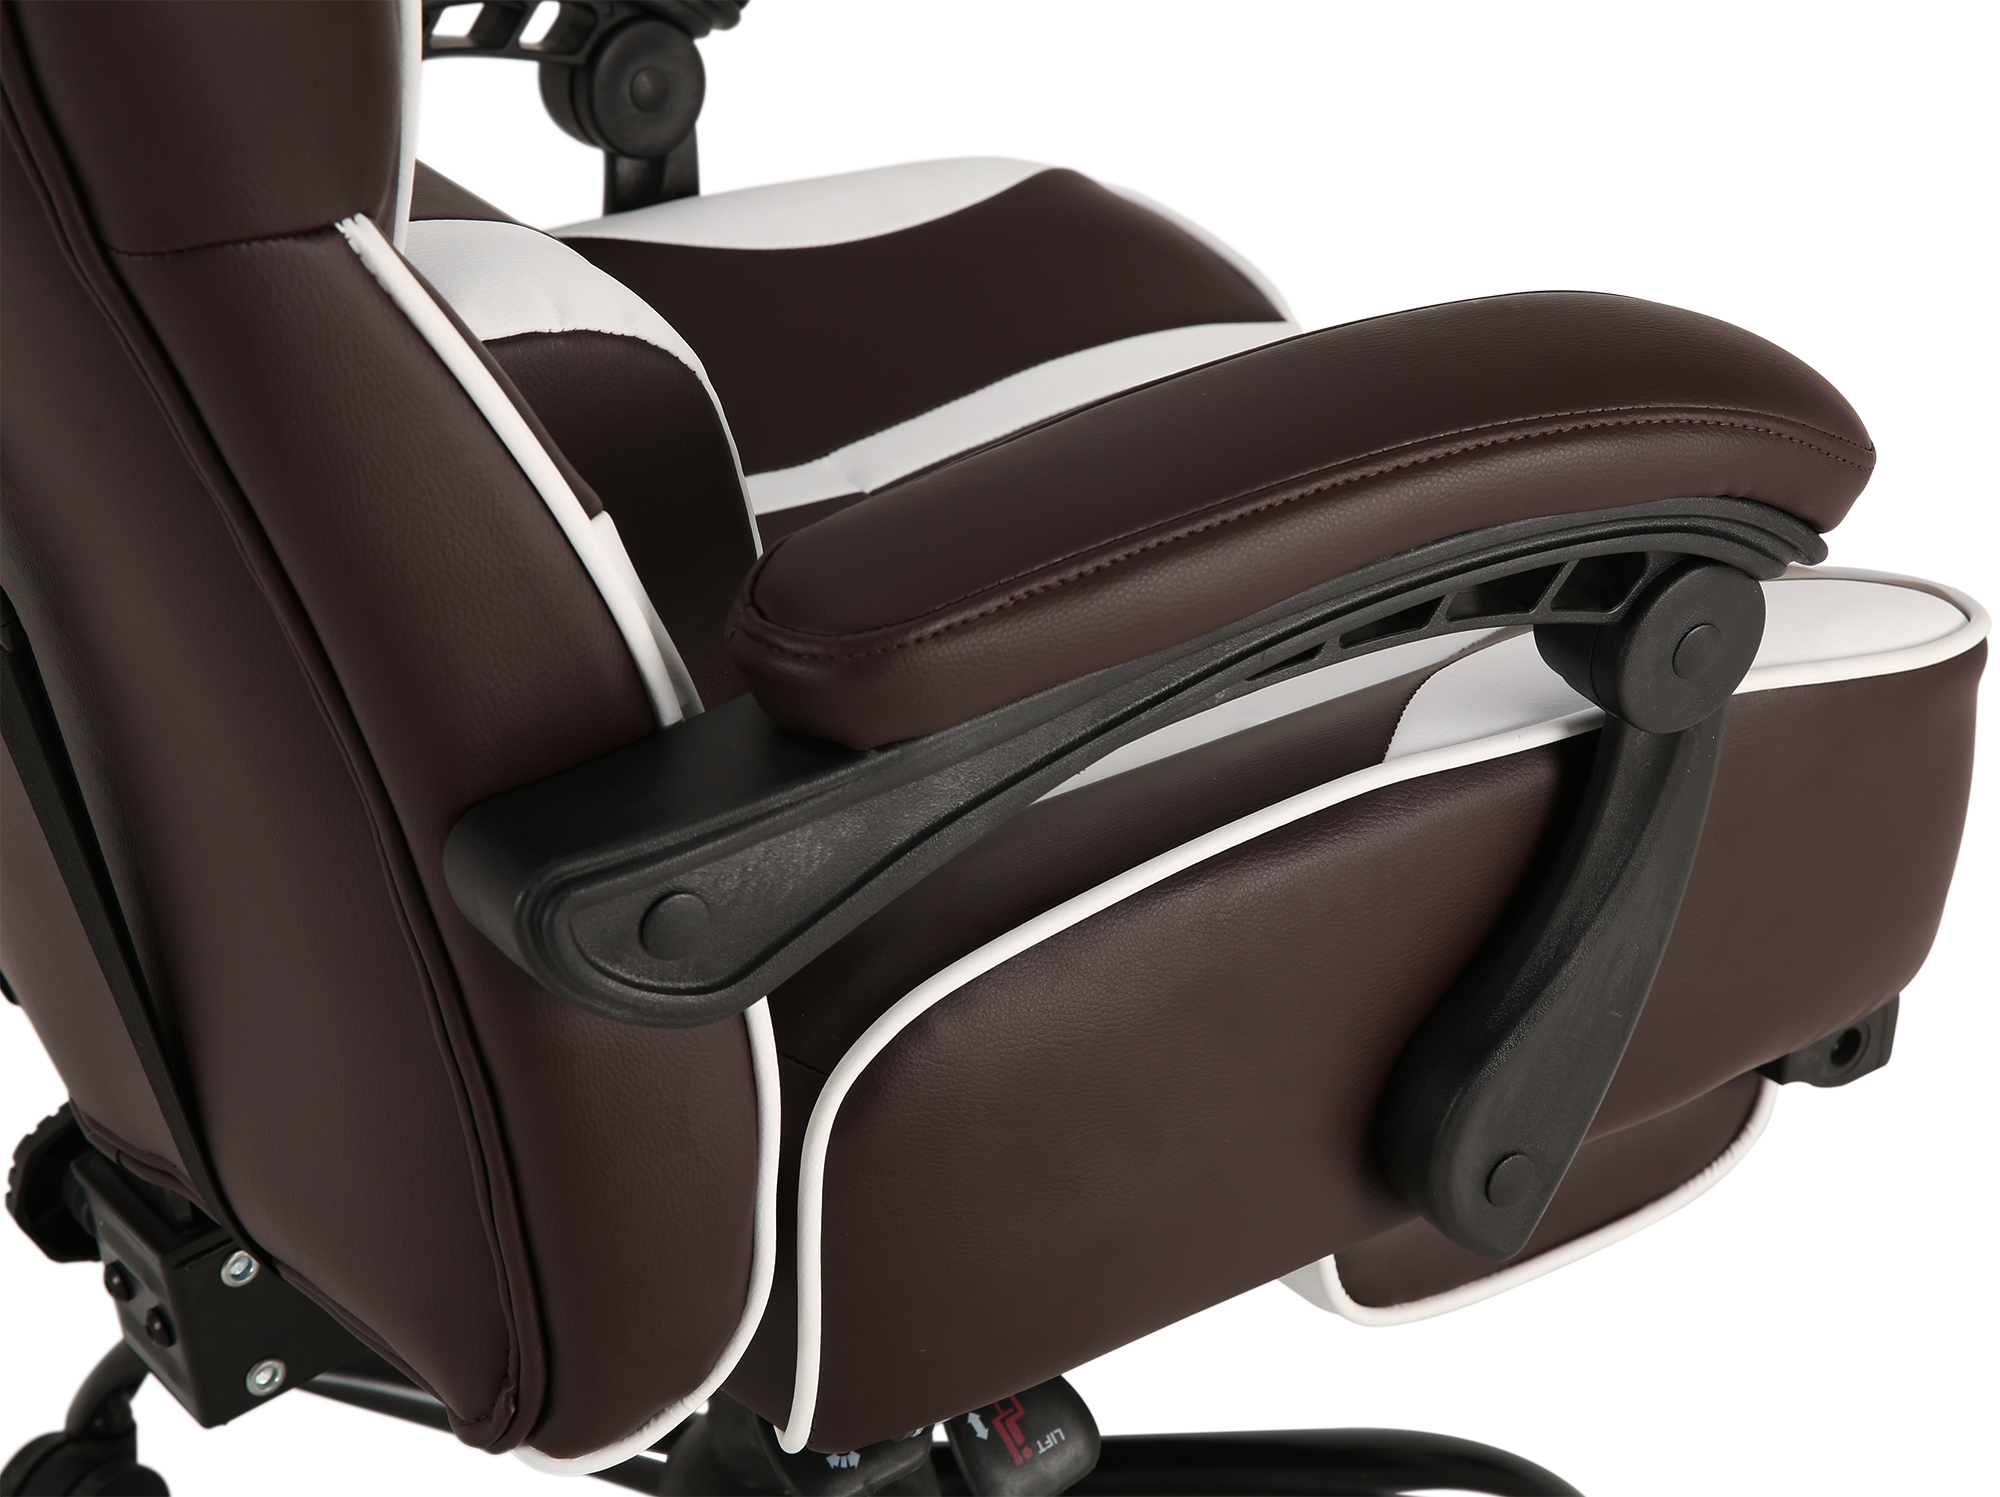 Геймерское кресло GT Racer коричневое с белым (X-2748 Dark Brown/White) - фото 8